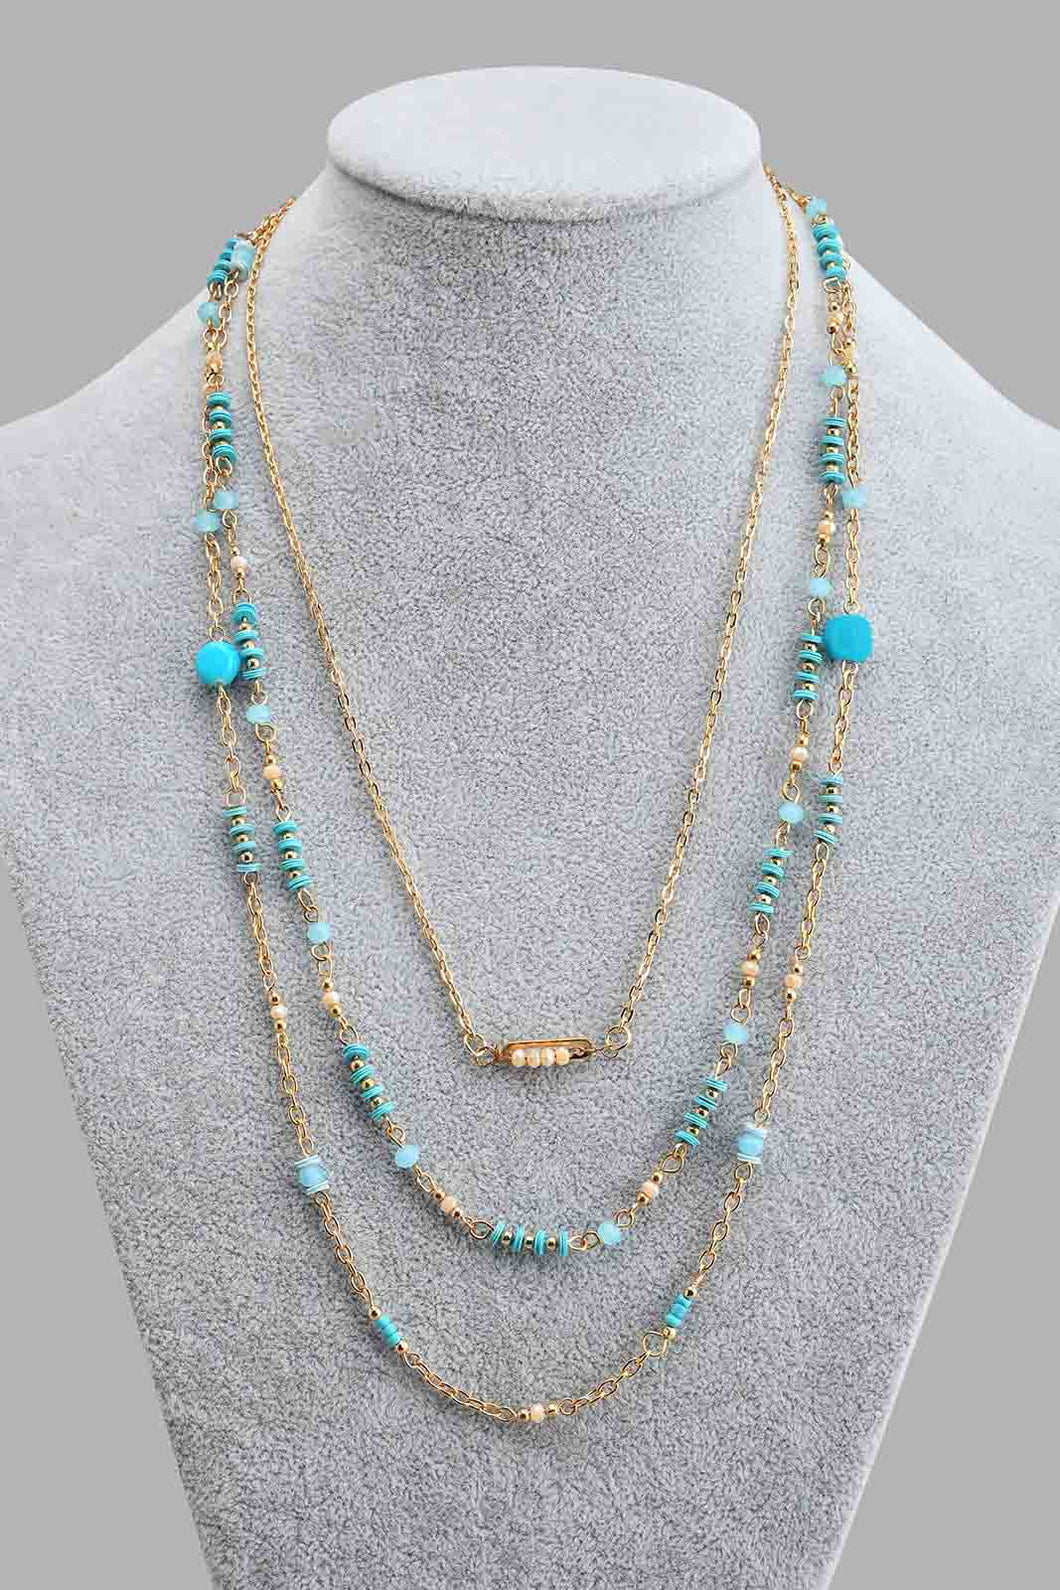 Gold And Mint Embellished Necklace For Women عقد مزين باللون الذهبي والأزرق الفاتح للنساء